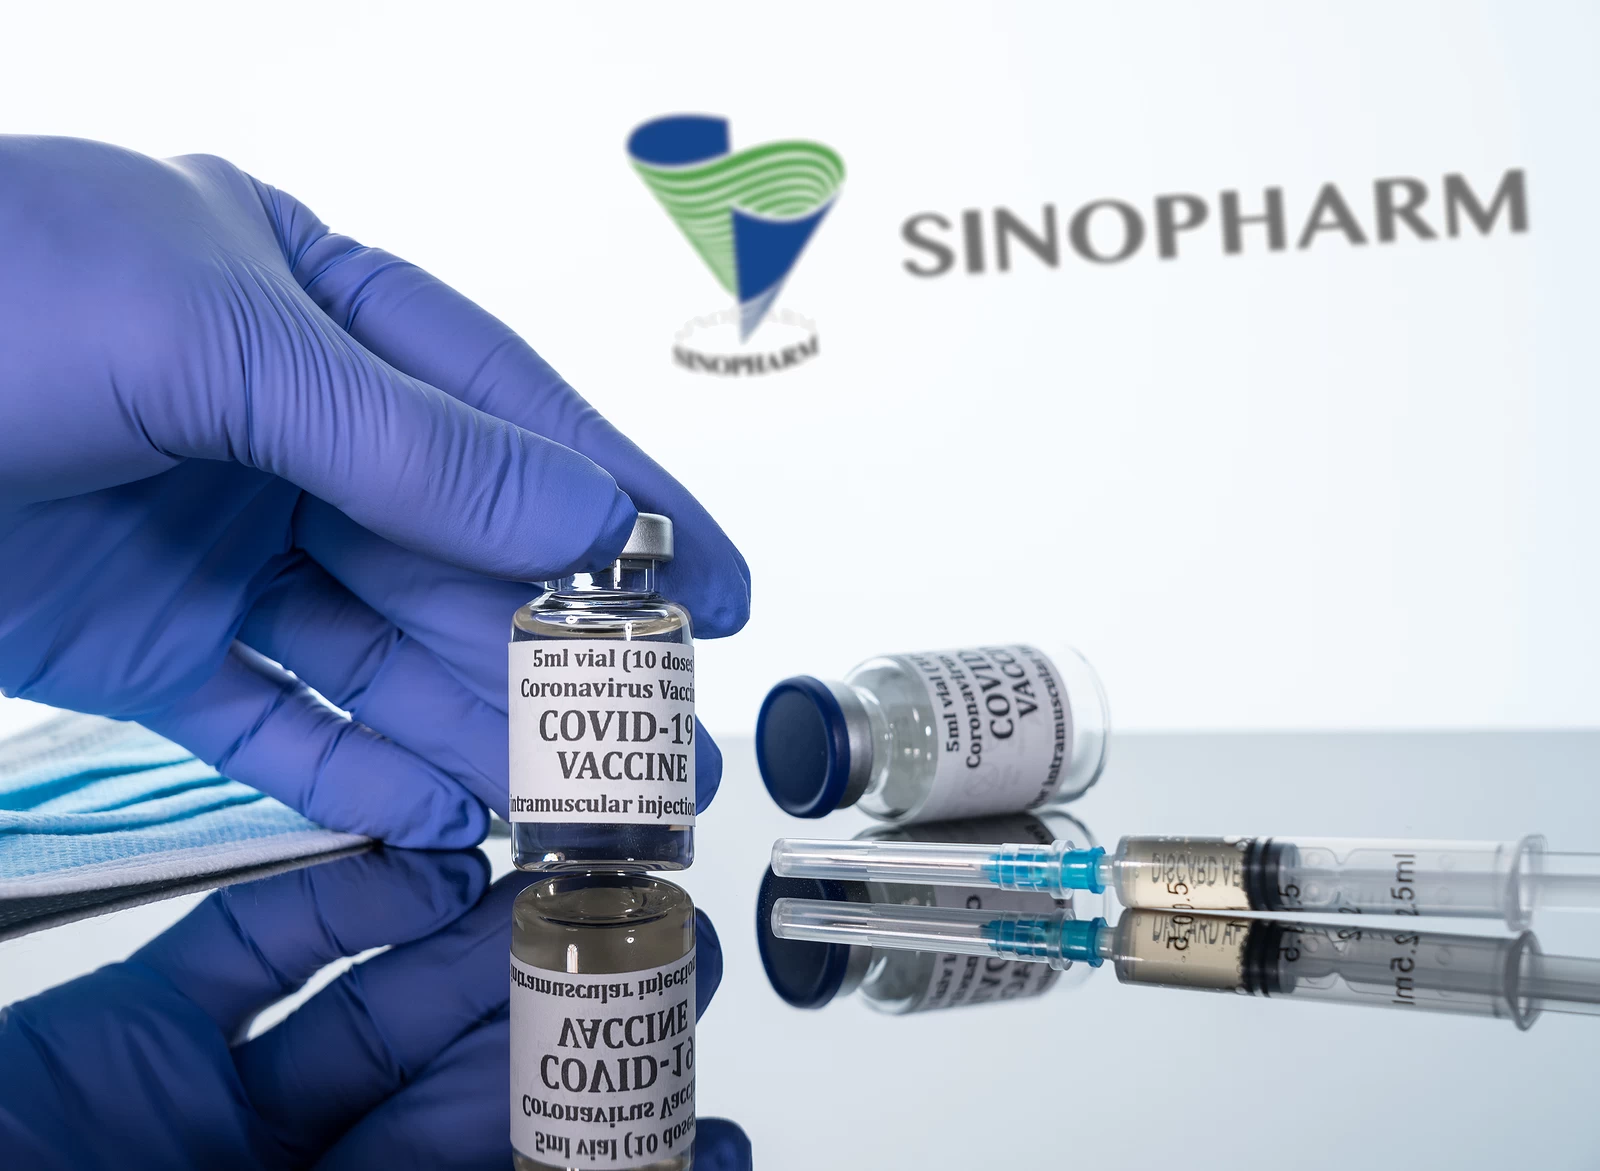 WHO okays Sinopharm vaccine for emergency use